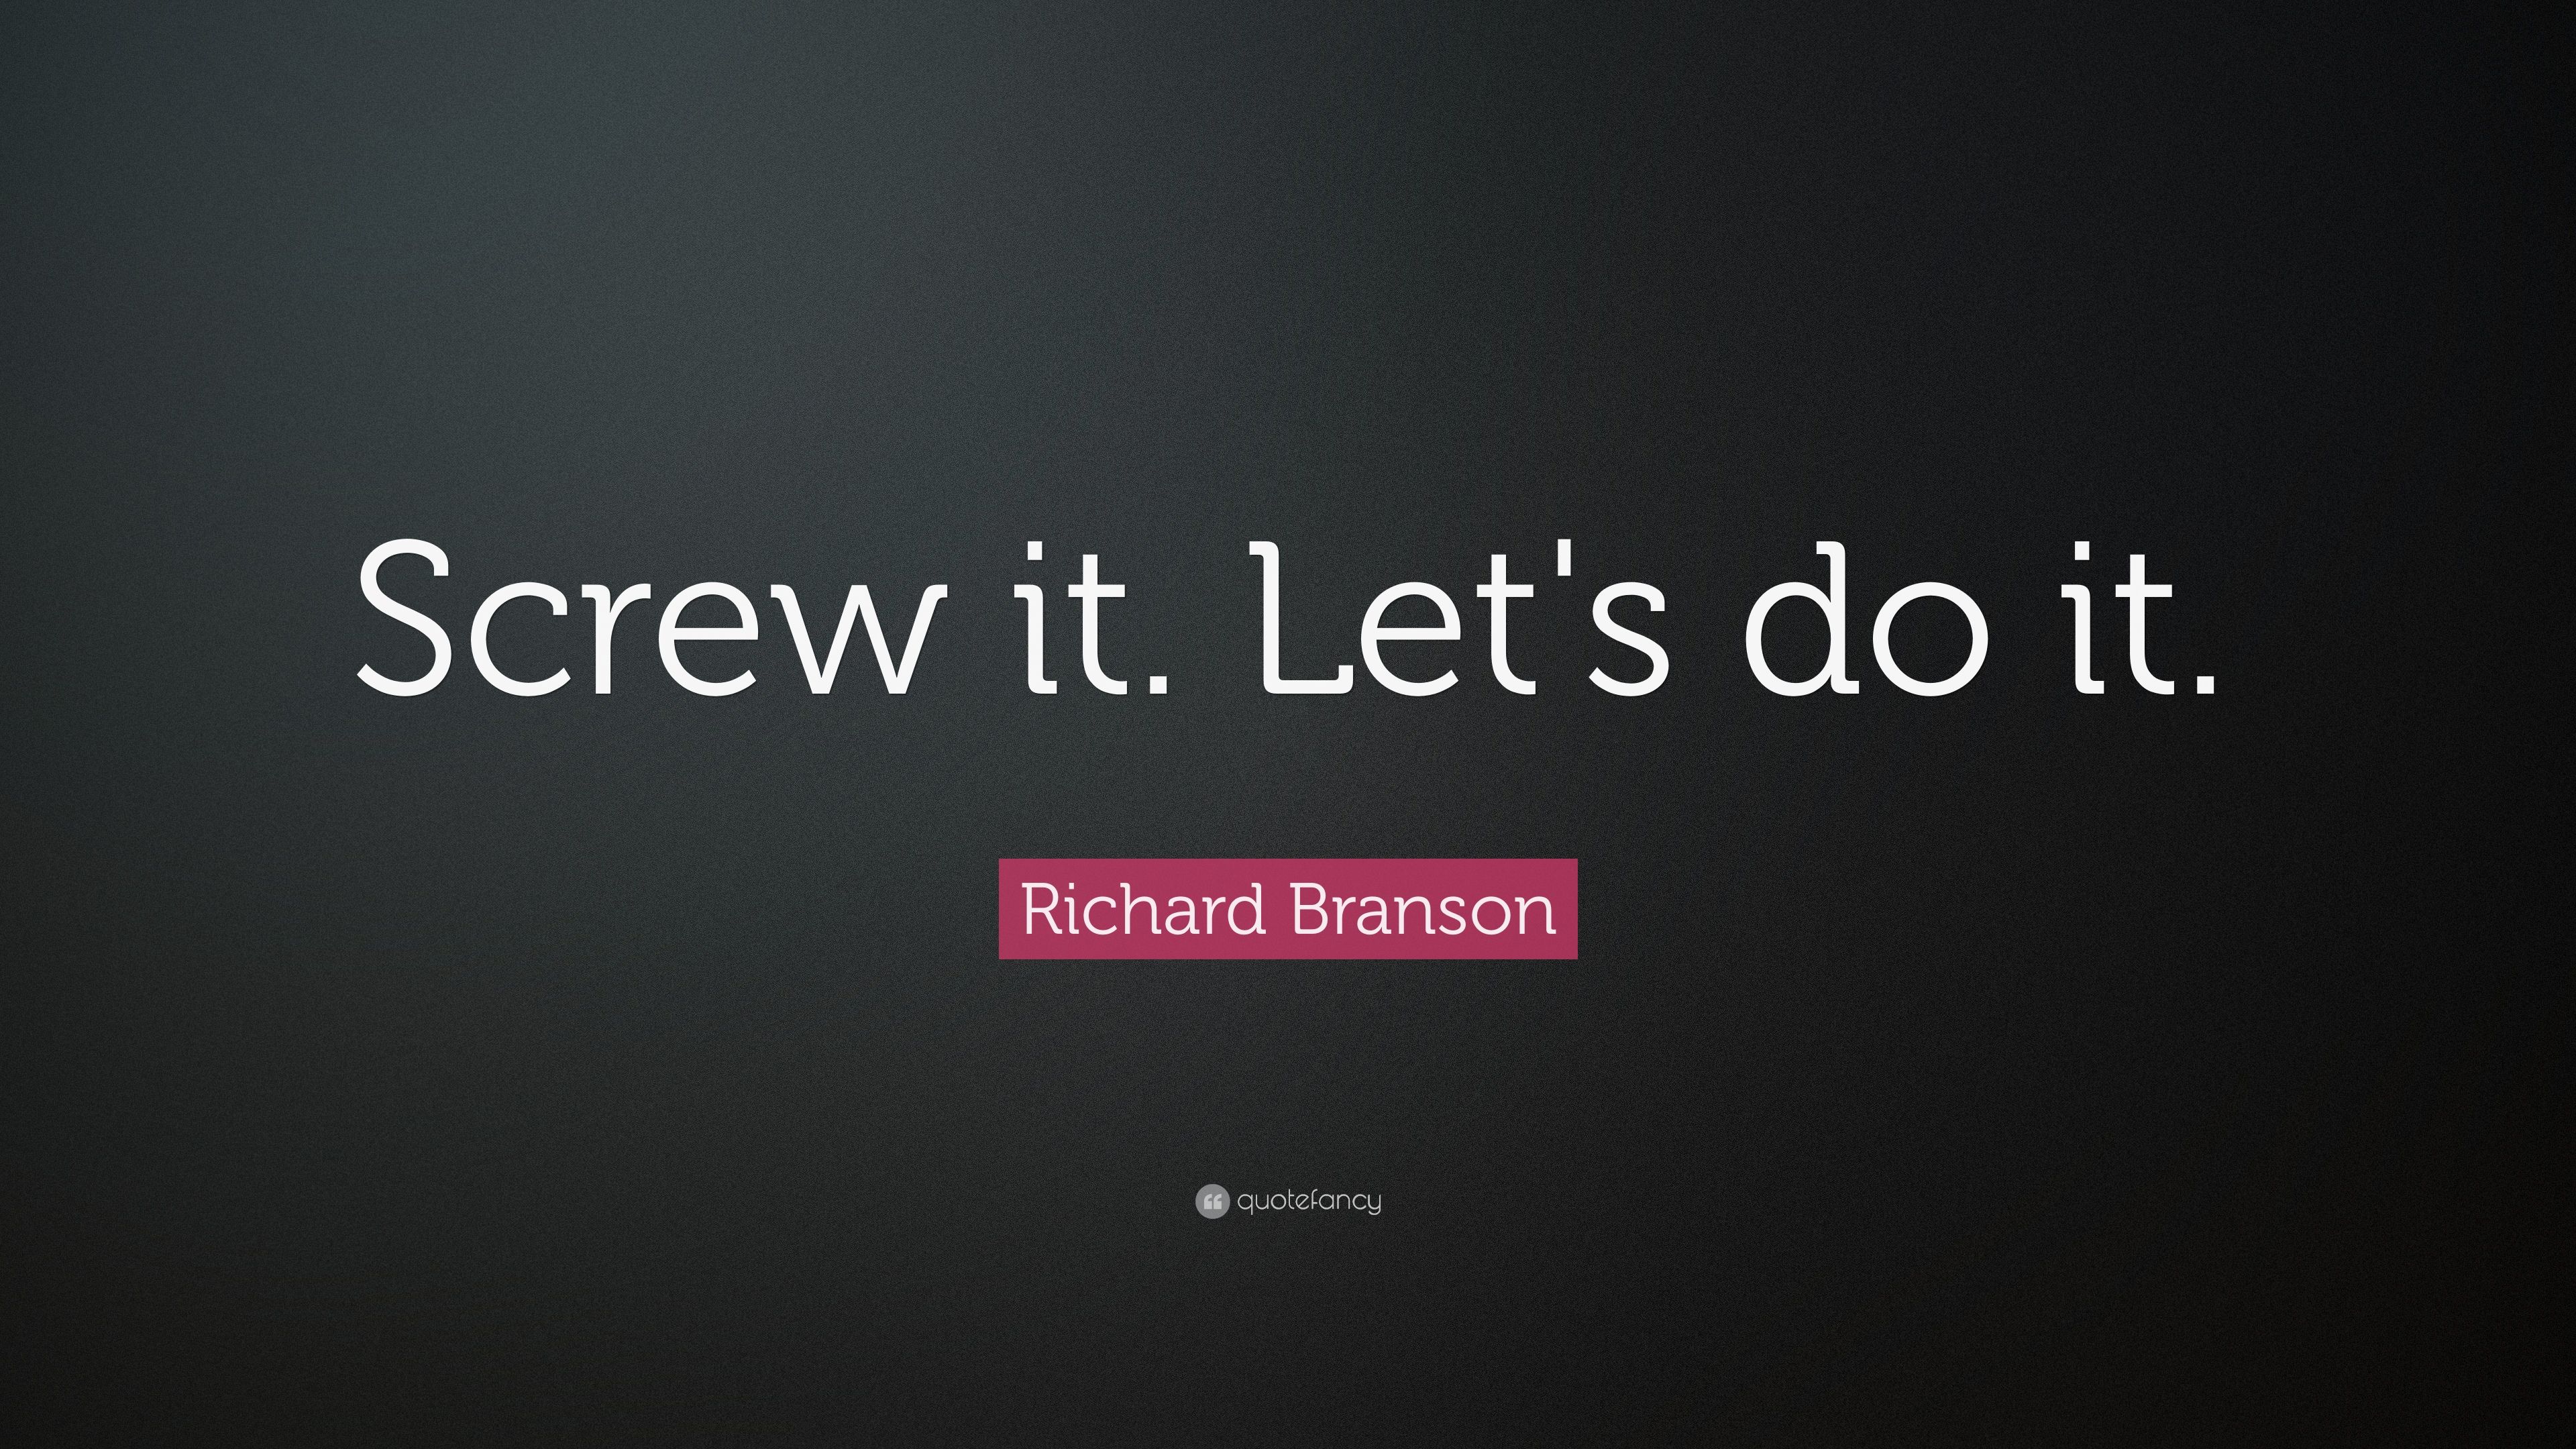 Richard Branson Quote: “Screw it. Let's do it.” (35 wallpaper)